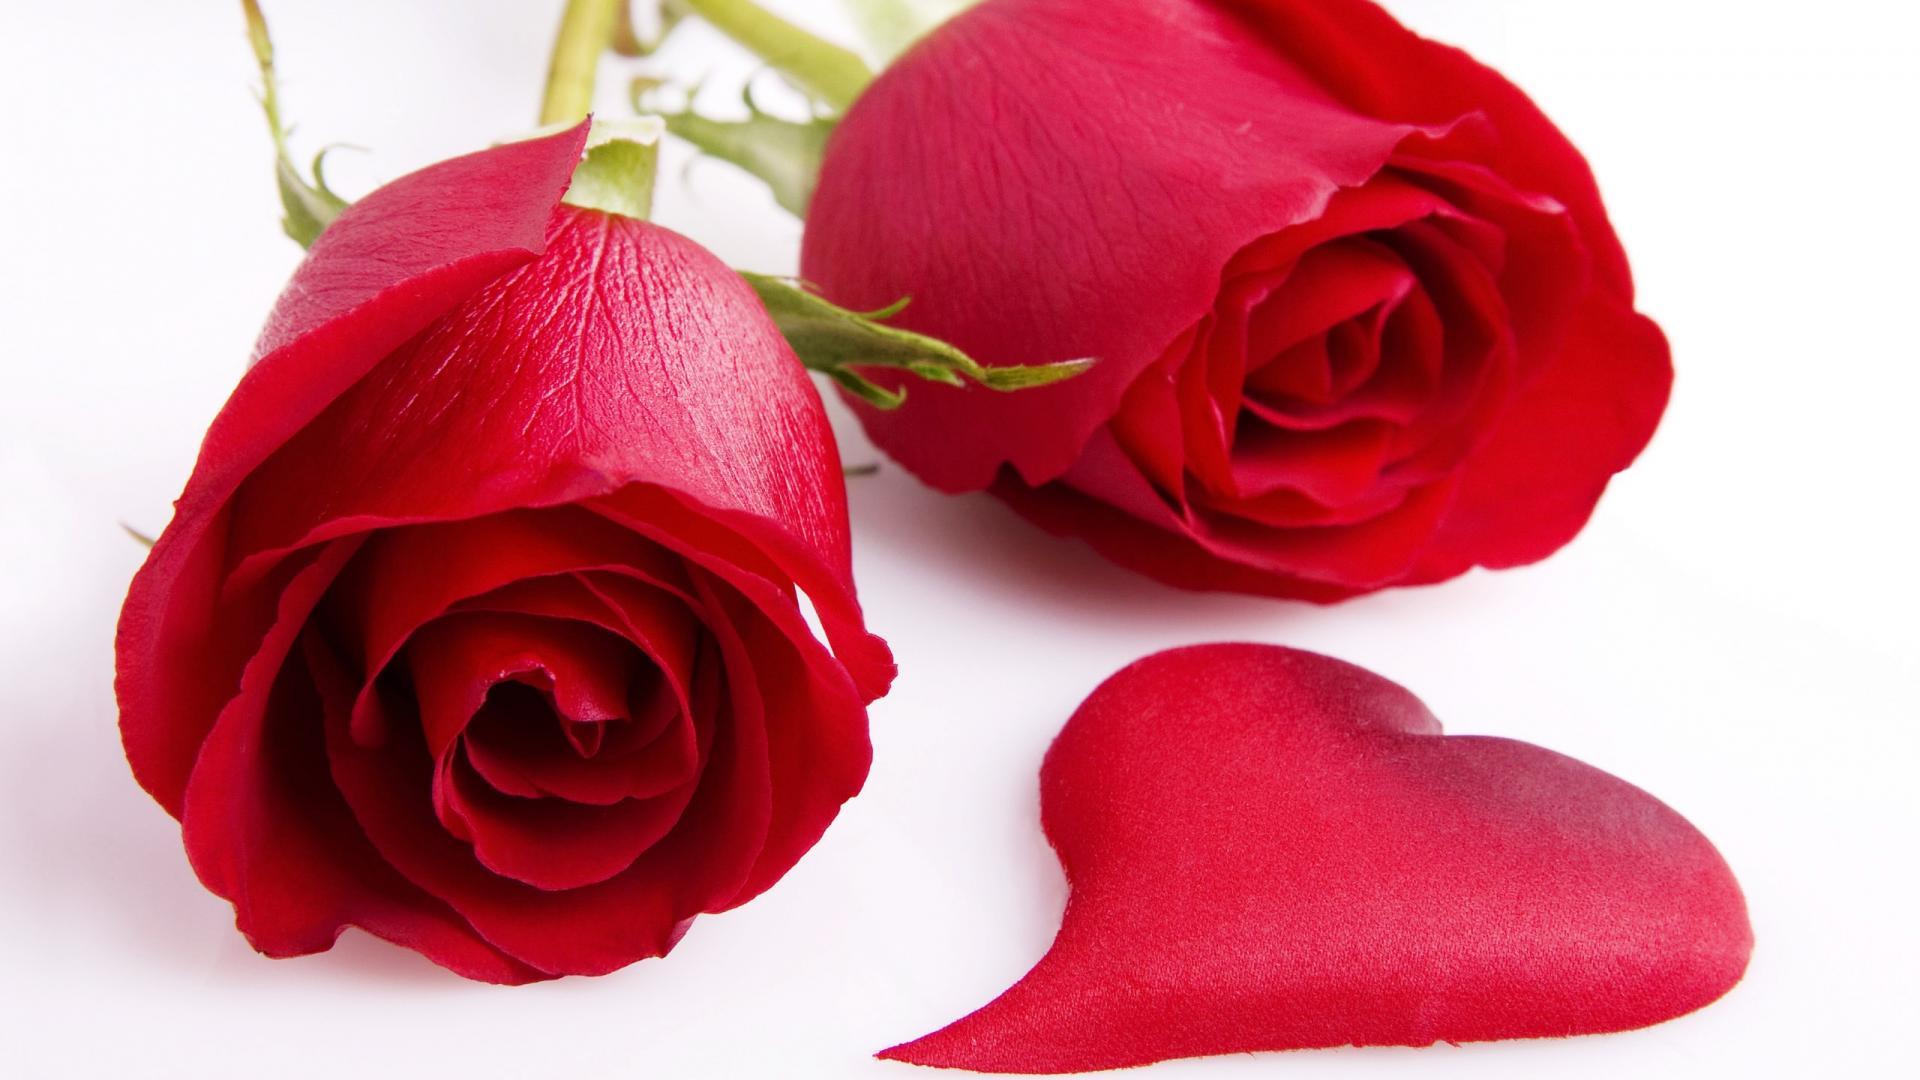 Red Rose And Heart Valentine Free Background Desktop Image